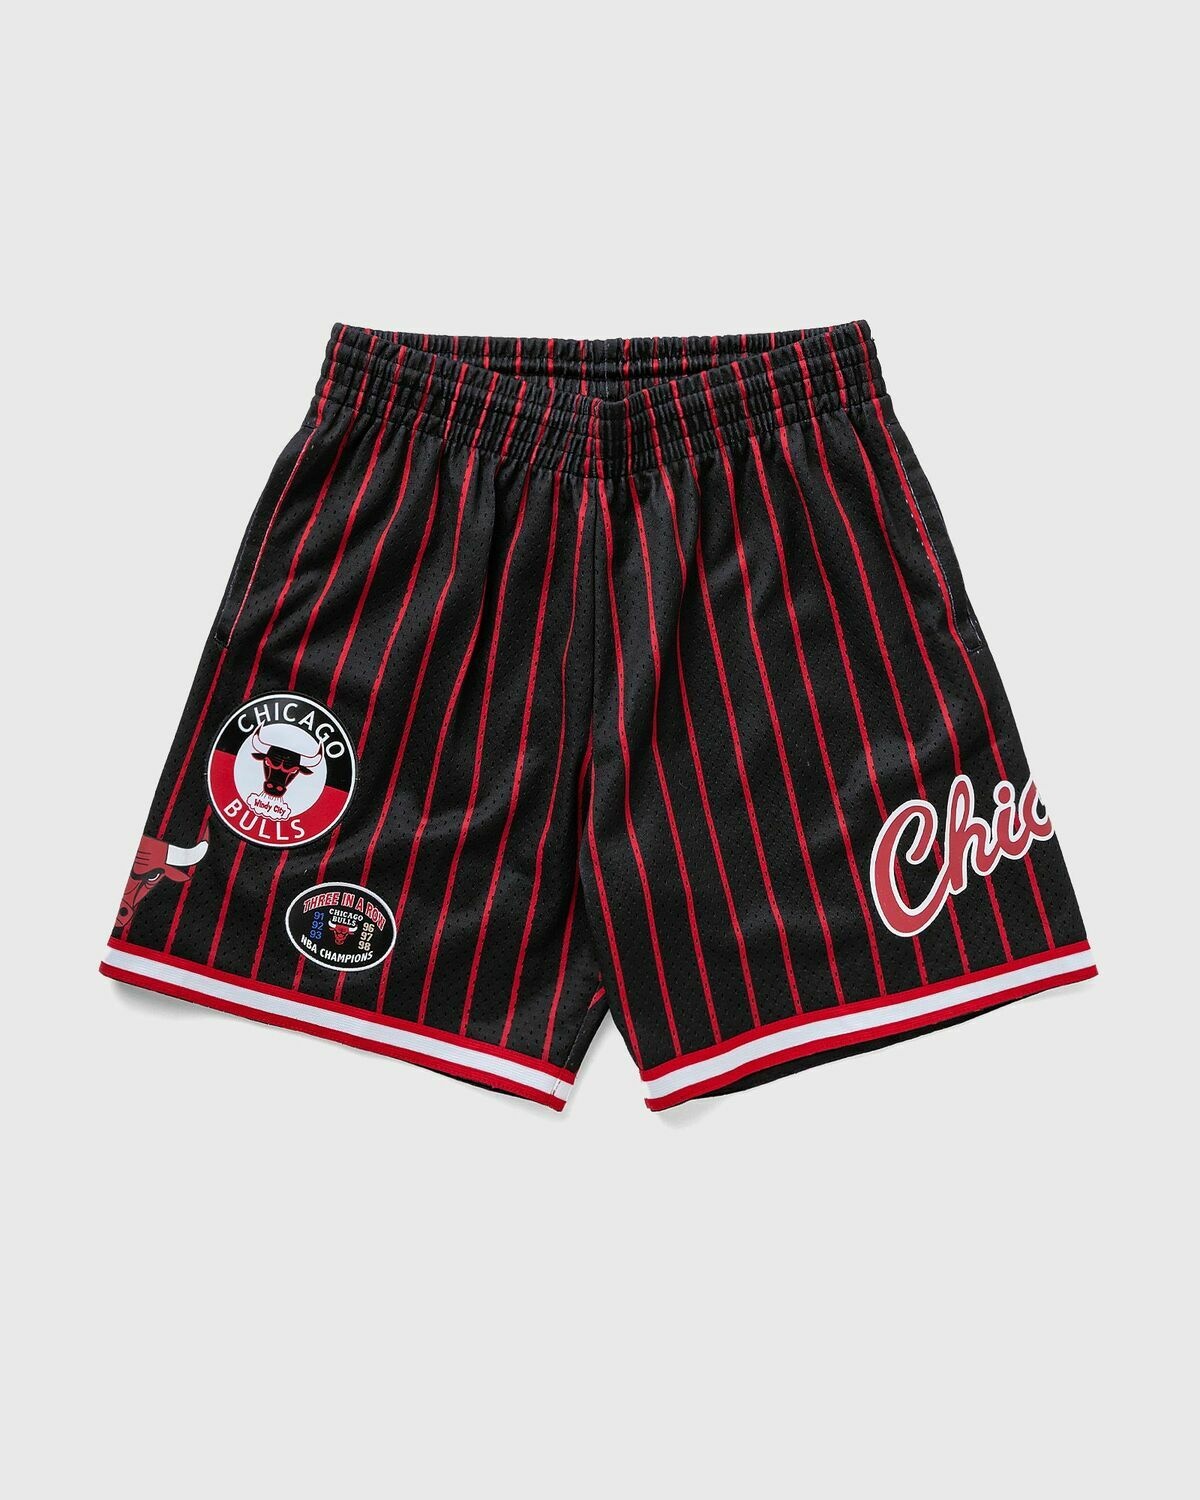 Mitchell & Ness Nba M&N City Collection Mesh Short Bulls Black/Red - Mens - Sport & Team Shorts